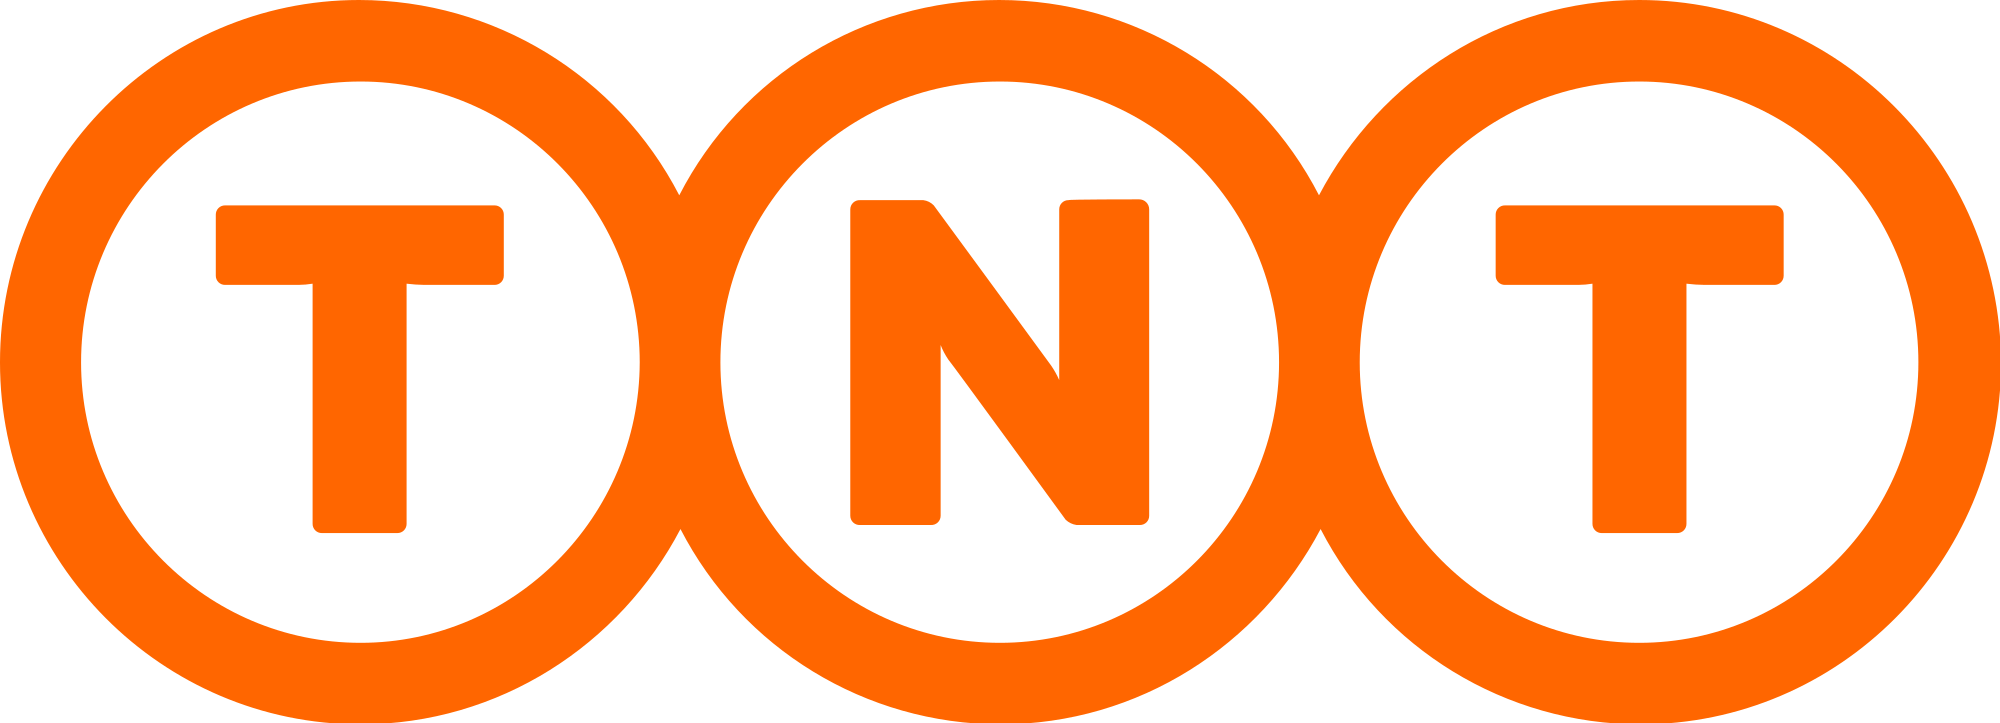 TNT Logo - TNT Express Logo.svg